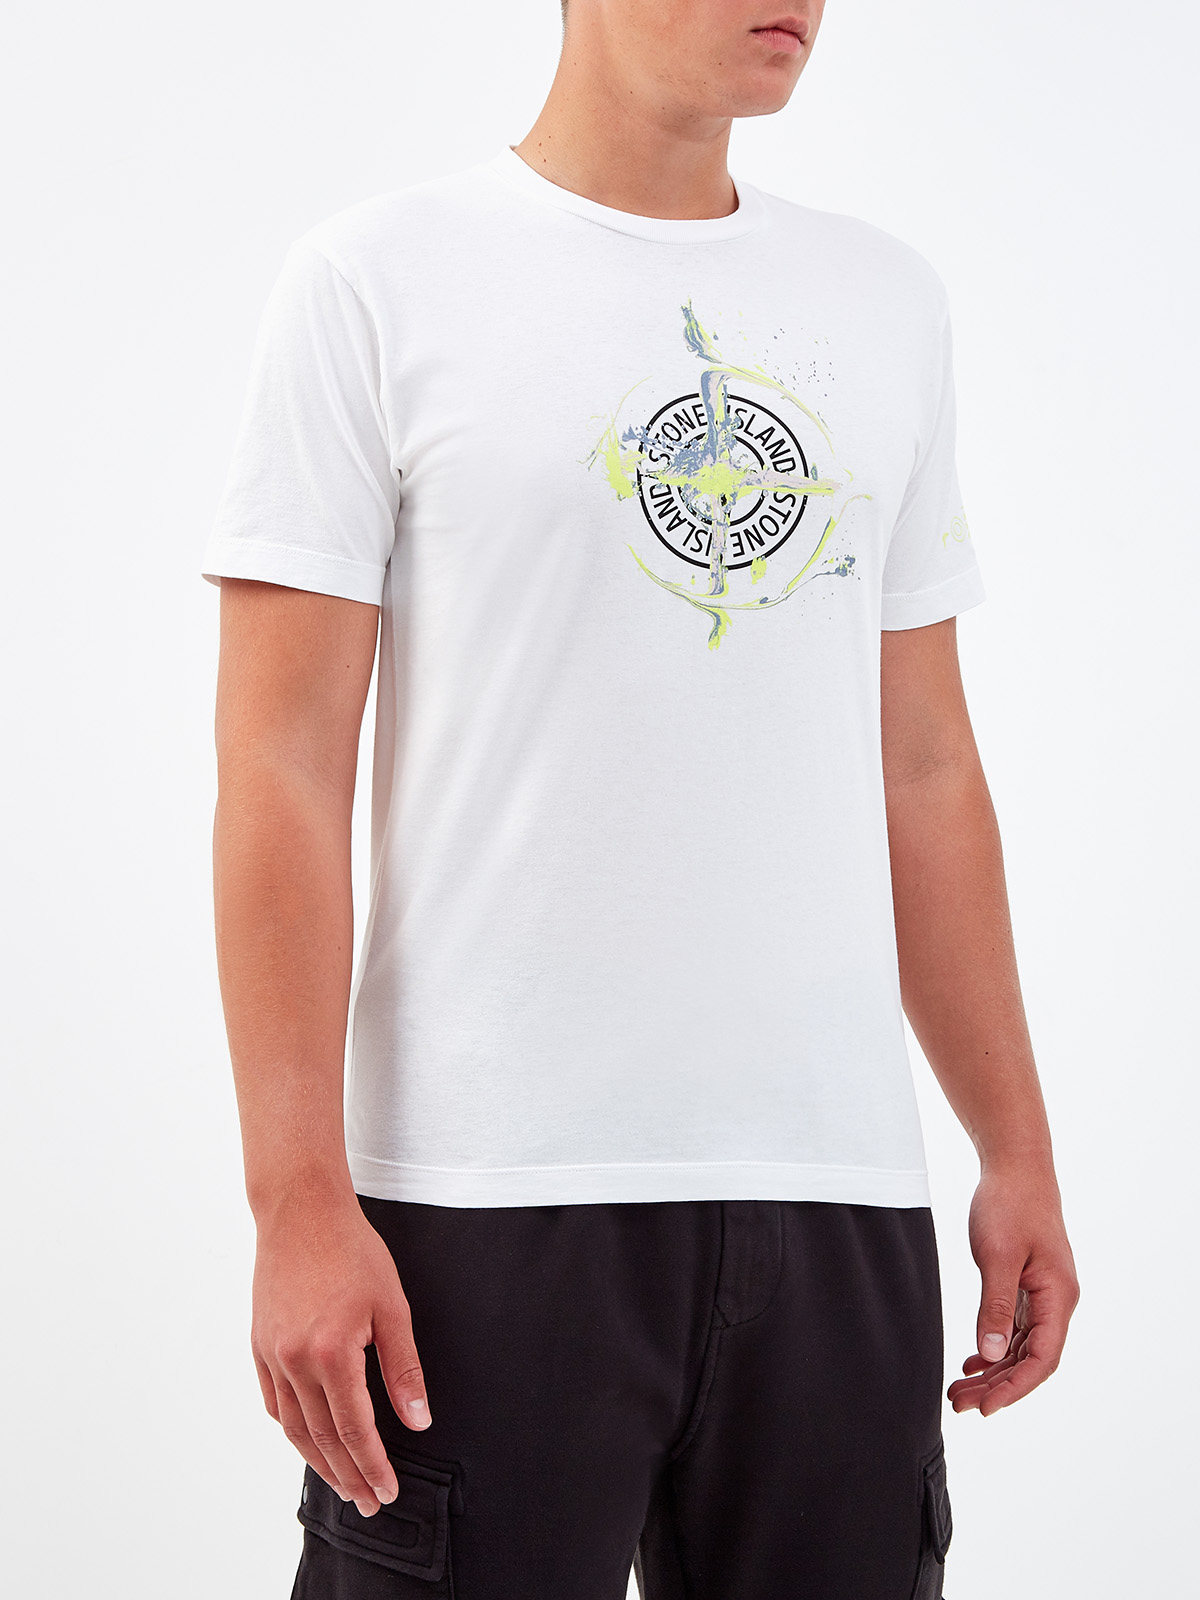 Белая футболка из джерси с яркой аппликацией STONE ISLAND, цвет белый, размер S;M;L;XL;2XL;3XL - фото 3